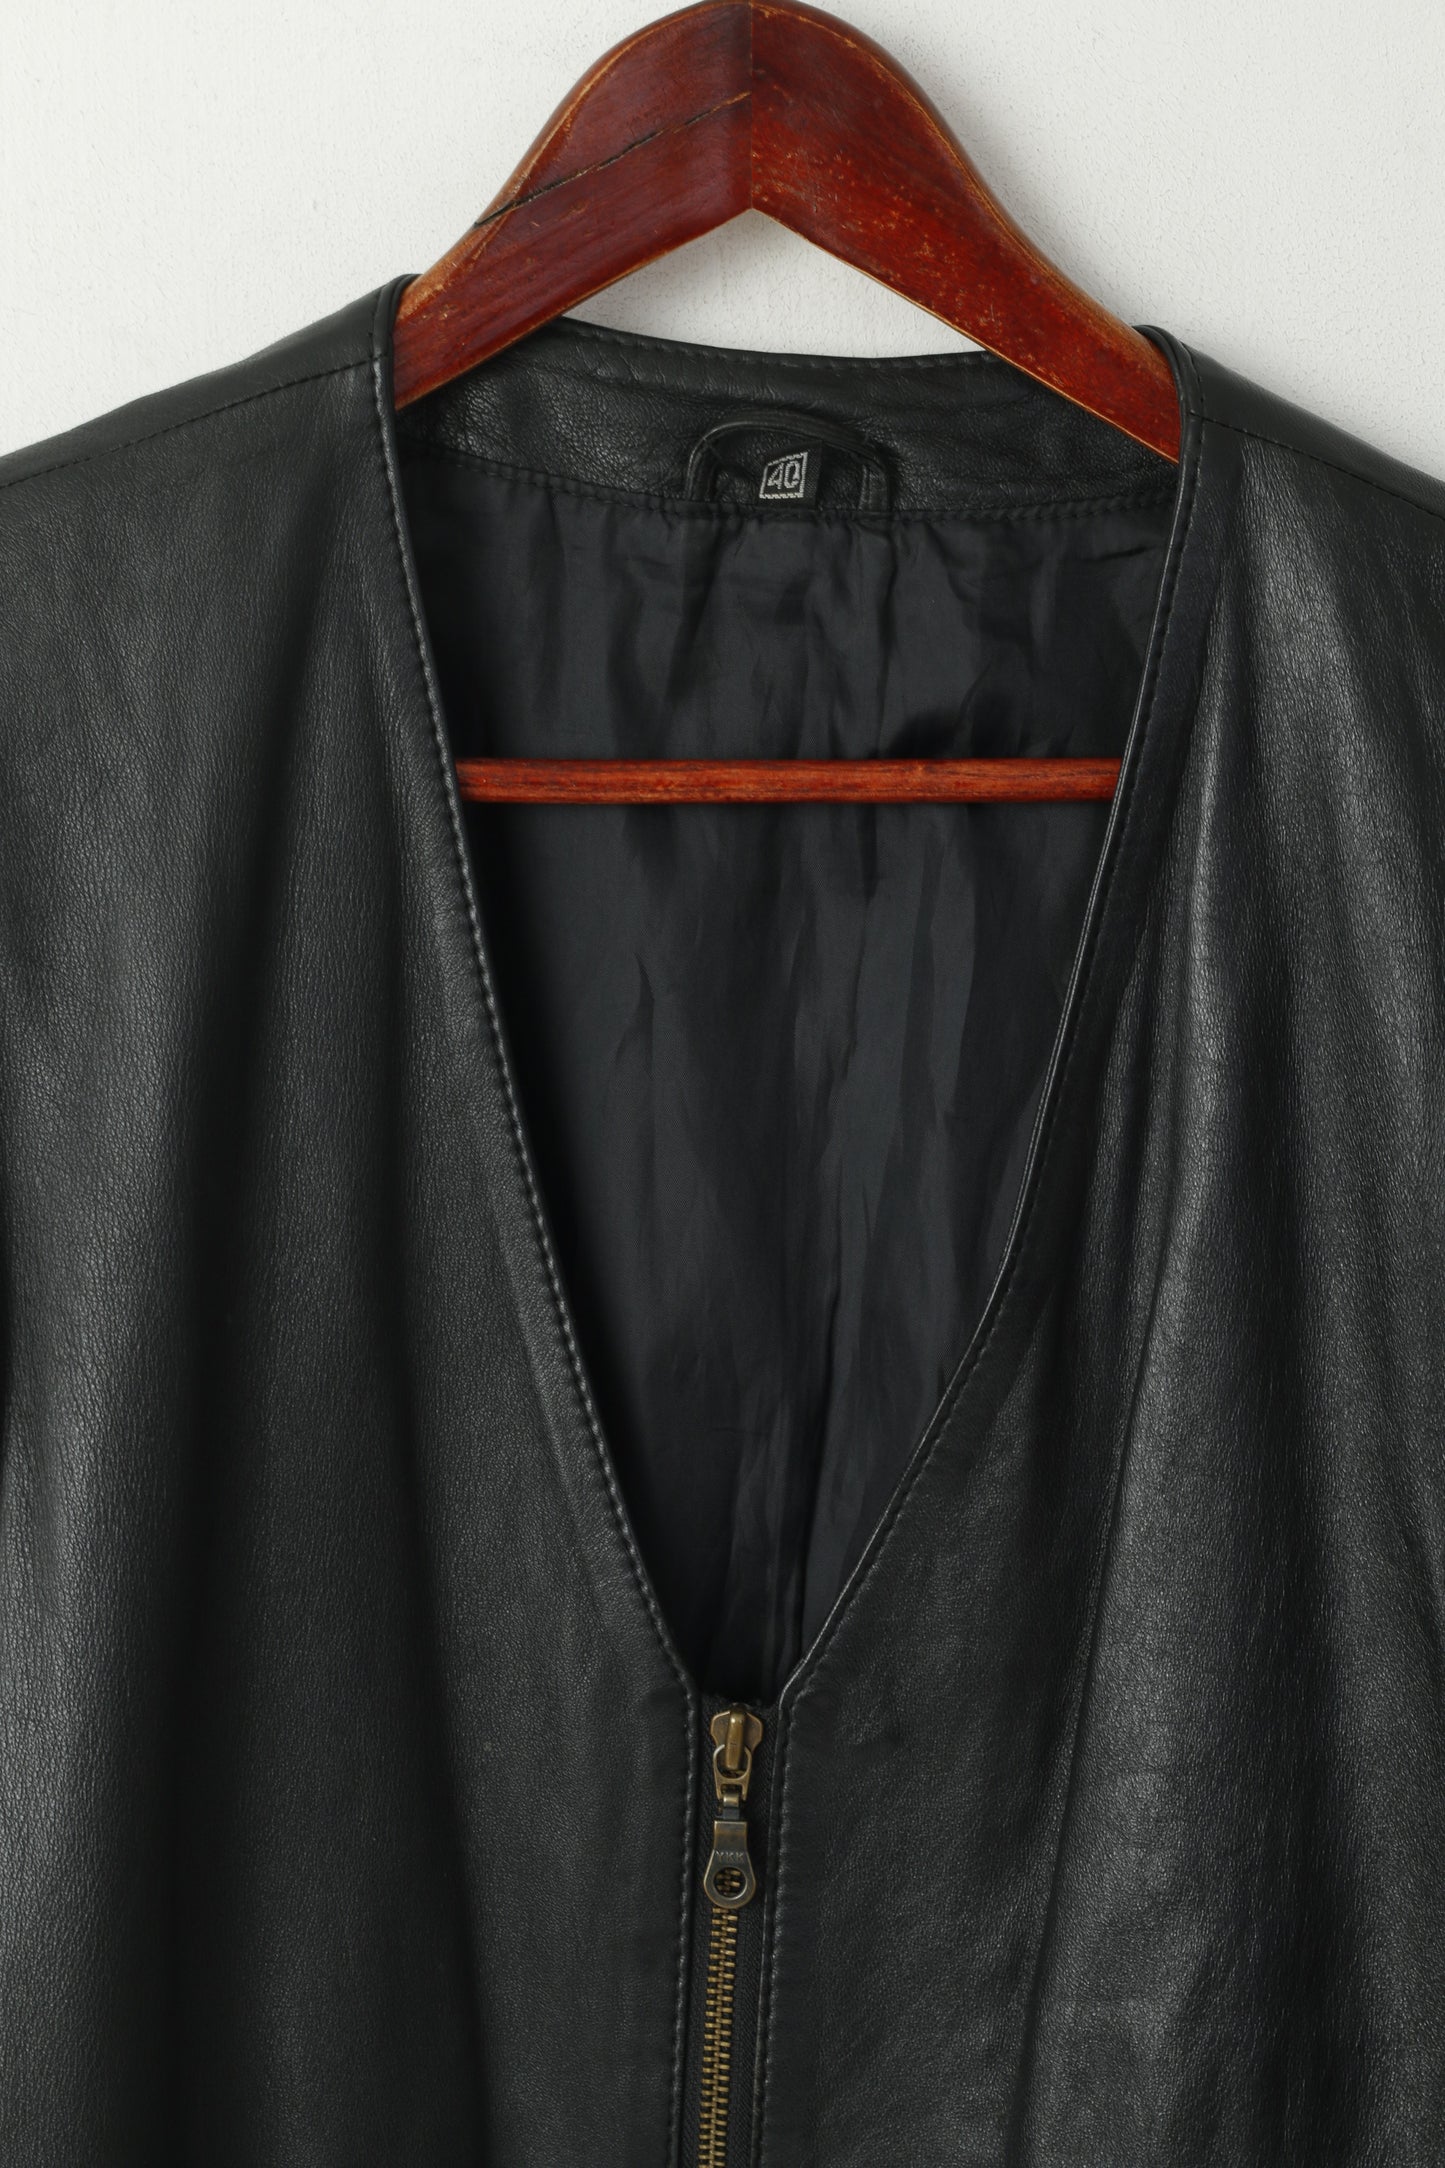 Yessica Women 40 Vest Black Leather Full Zipper Retro Pocket Classic Waistcoat